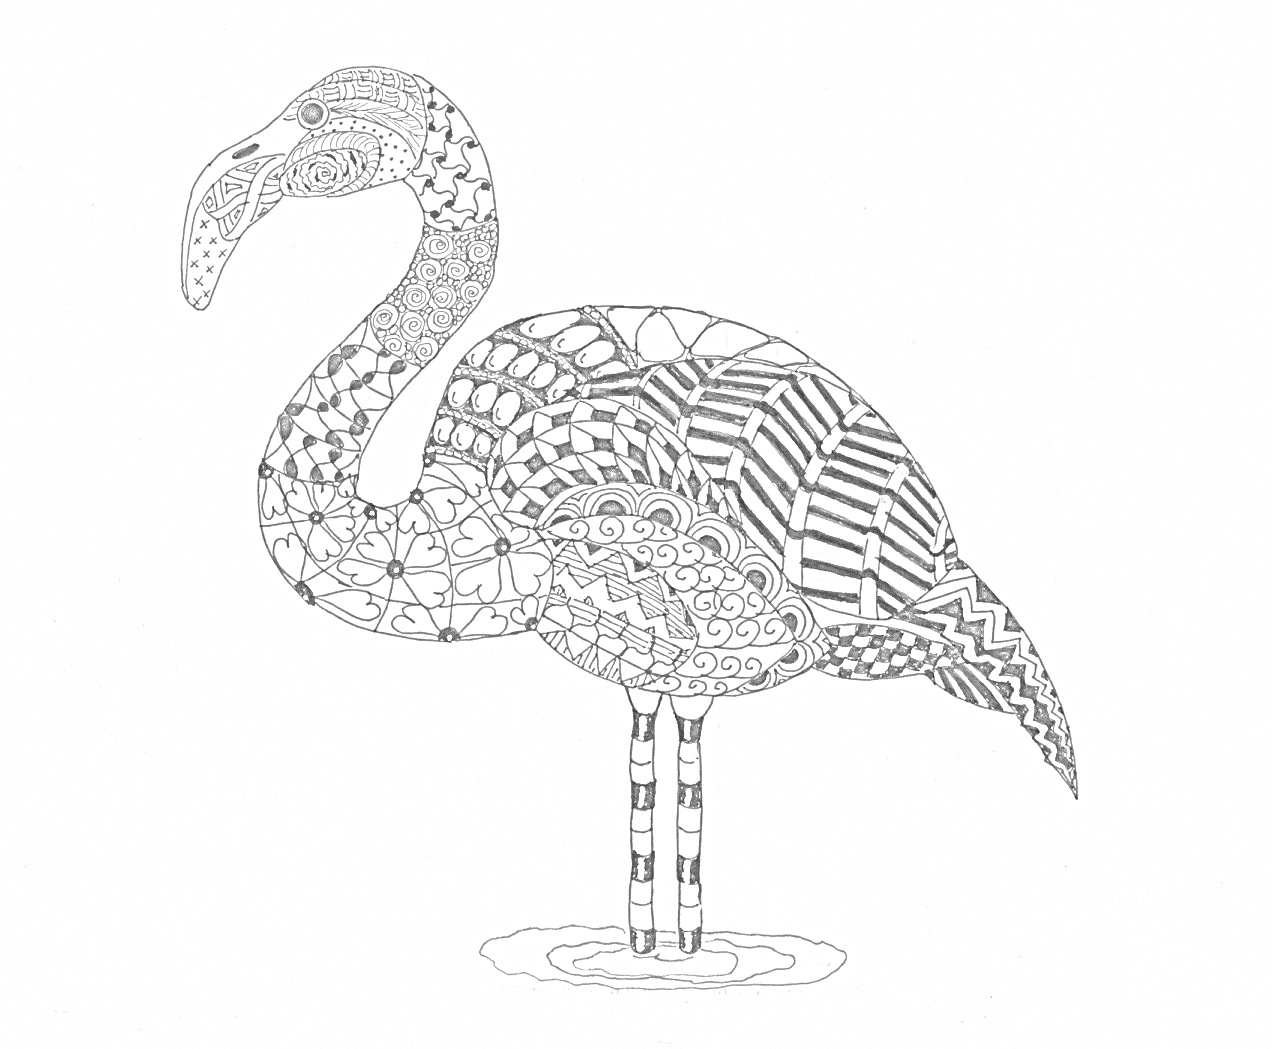 Антистресс-раскраска: фламинго с узорами, стоящий в воде